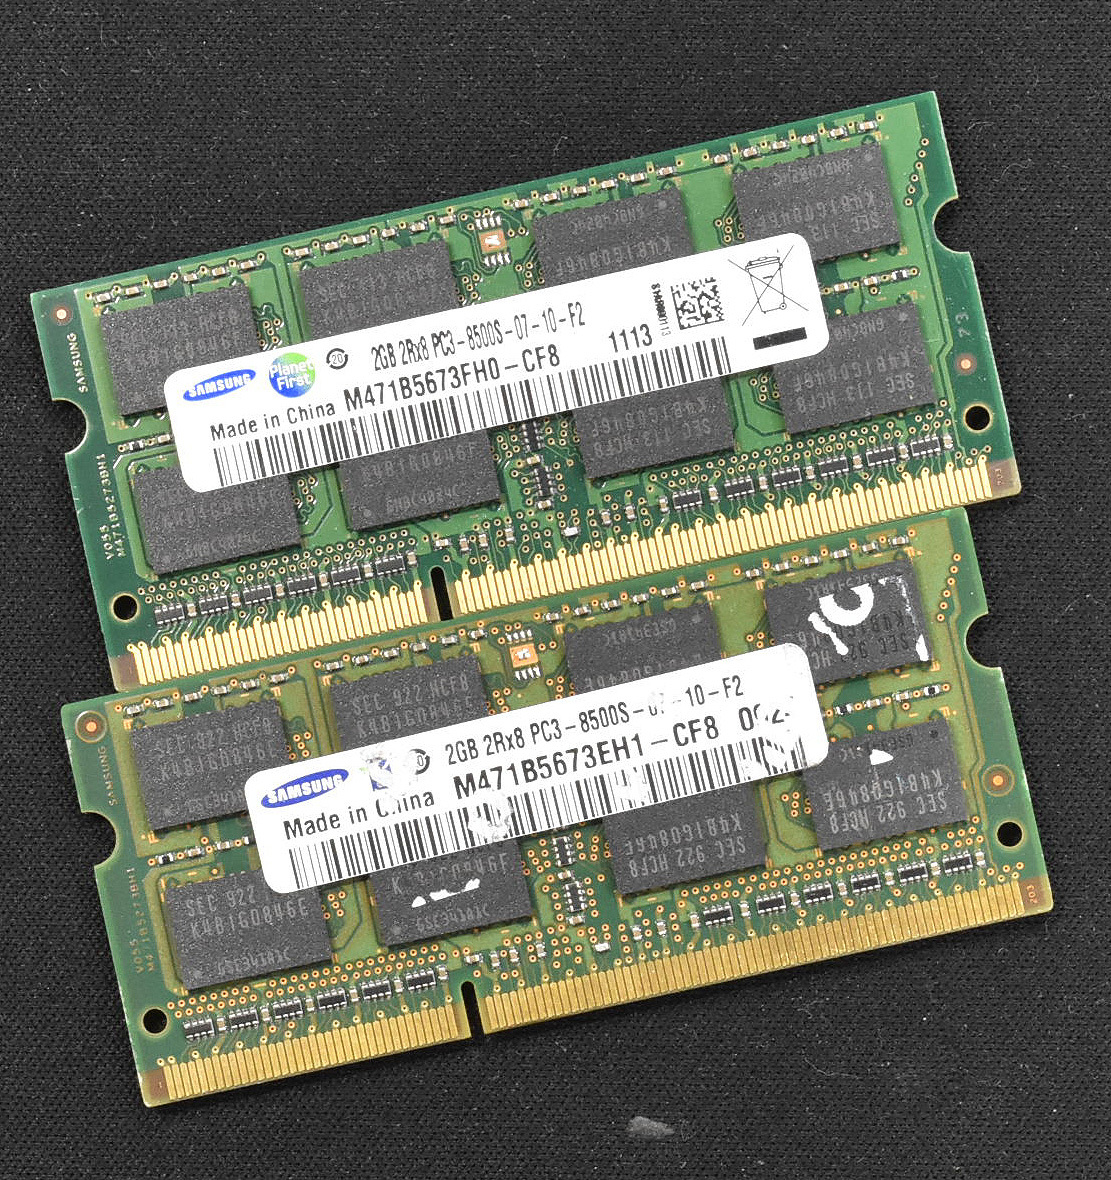 4GB (2GB 2枚組) PC3-8500S DDR3-1066 S.O.DIMM 204pin 2Rx8 ノートPC用メモリ 16chip Samsung 2G 4G Core2系対応可能 (管:SA3712_画像1